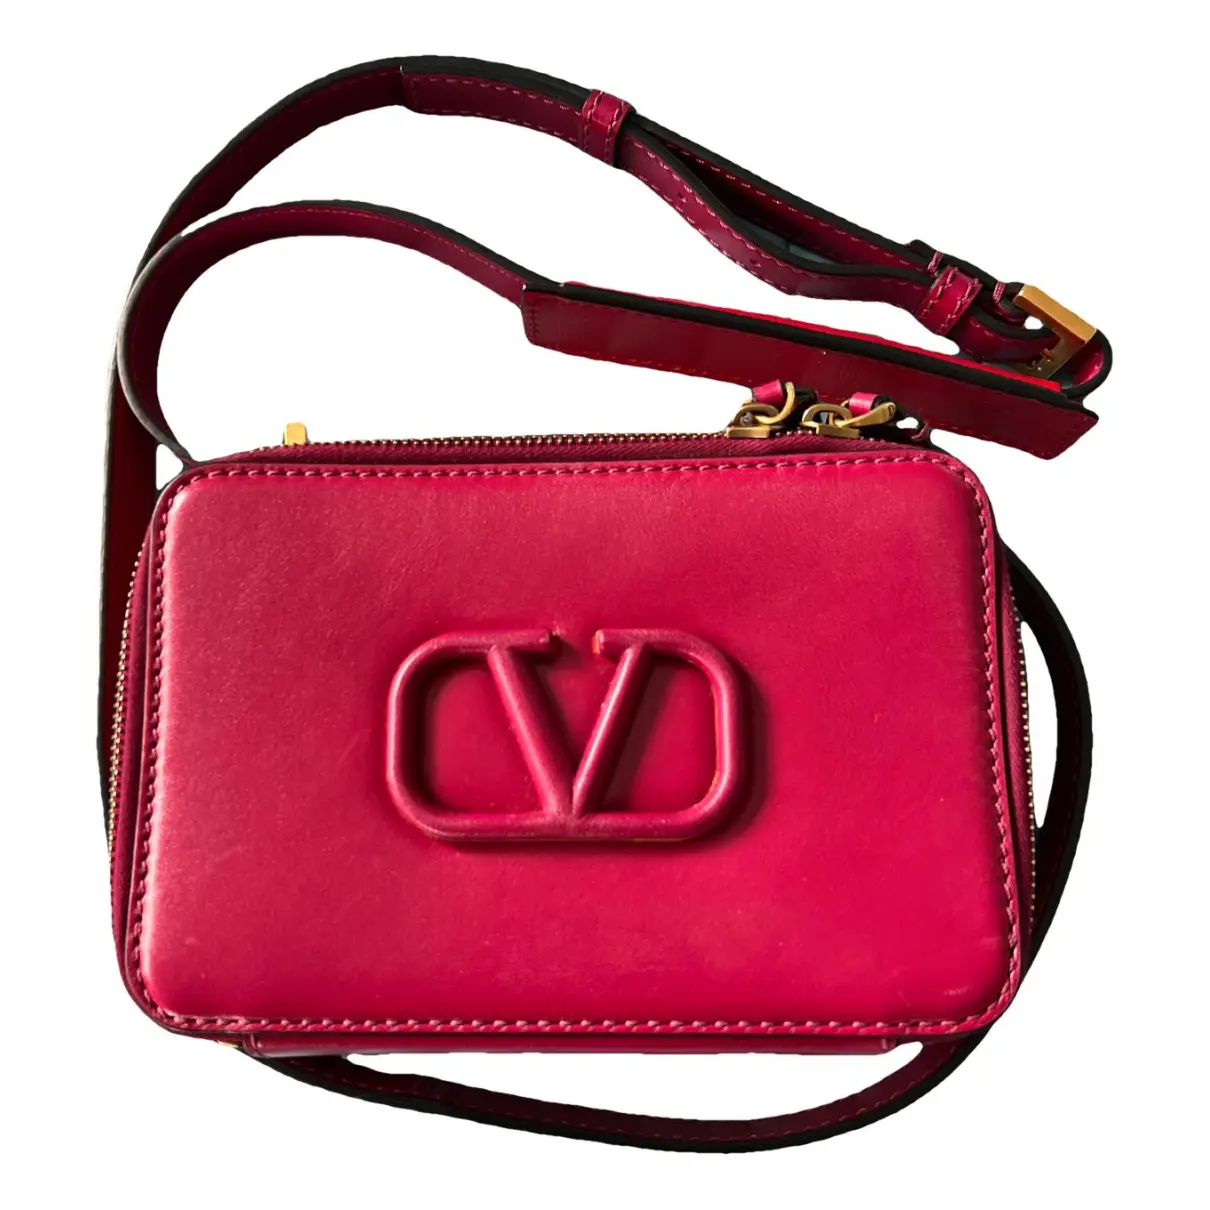 VLogo leather crossbody bag